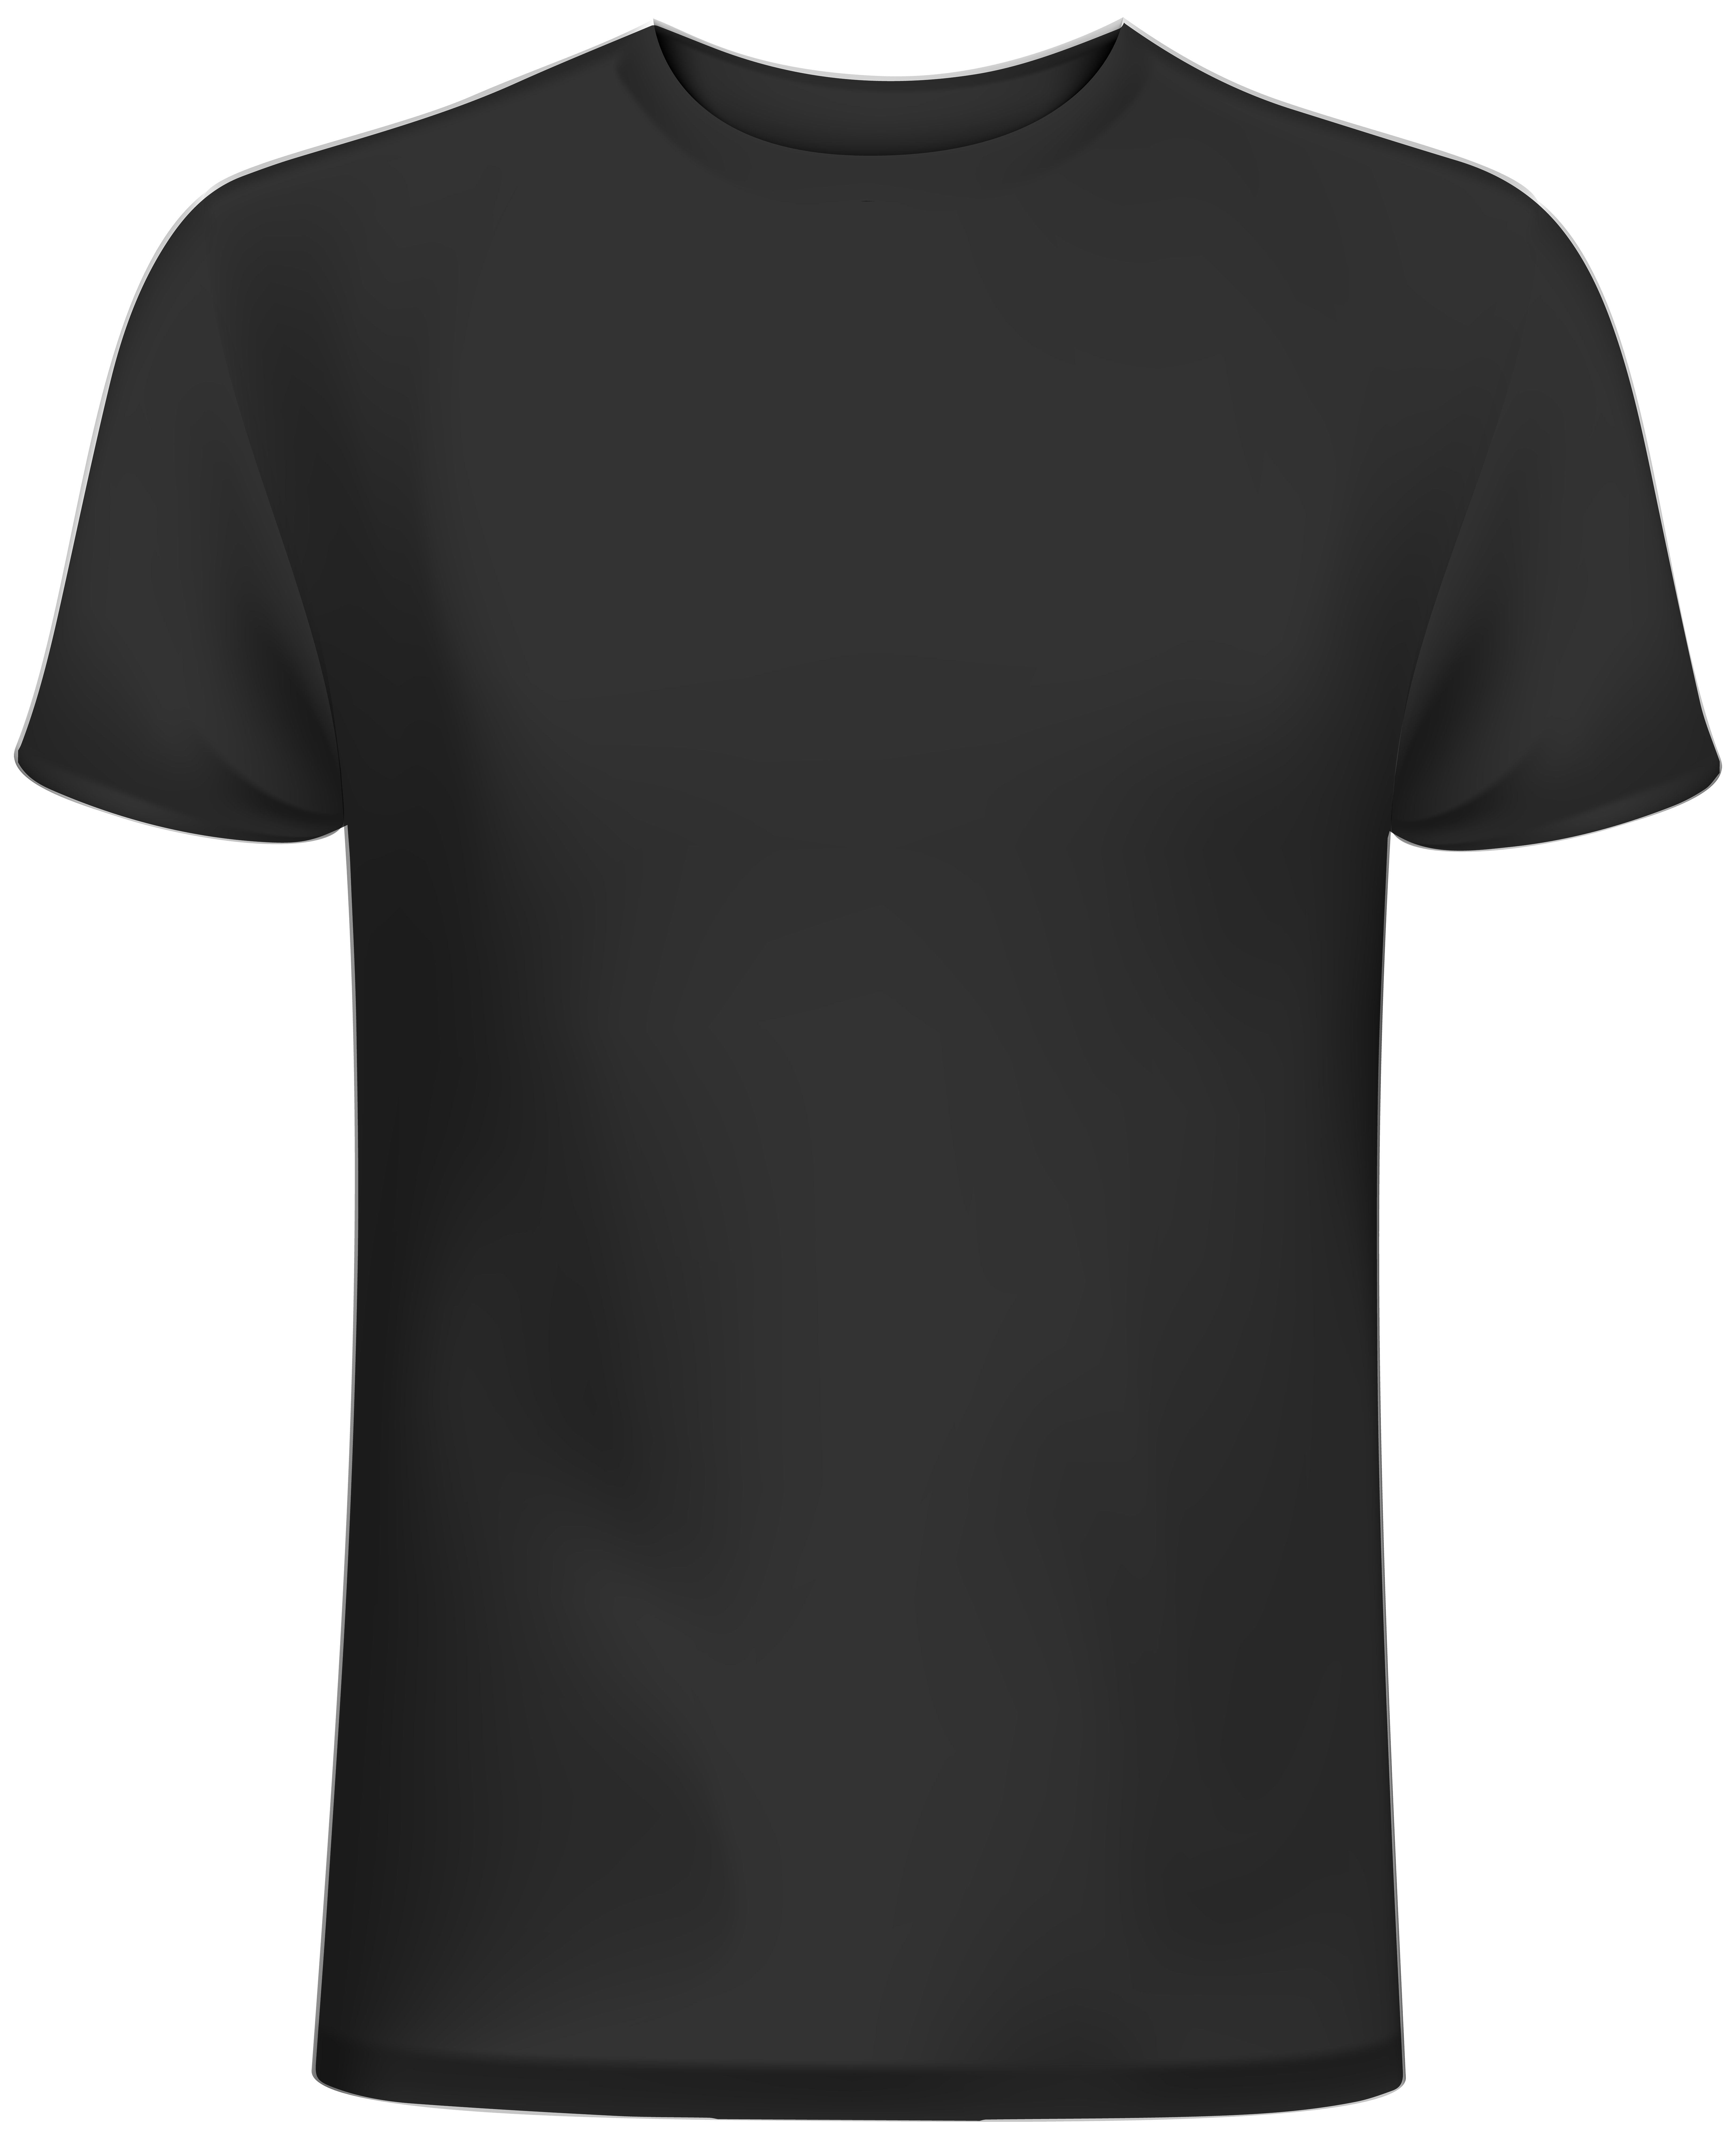 Download High Resolution T Shirt Black Png - Ghana tips